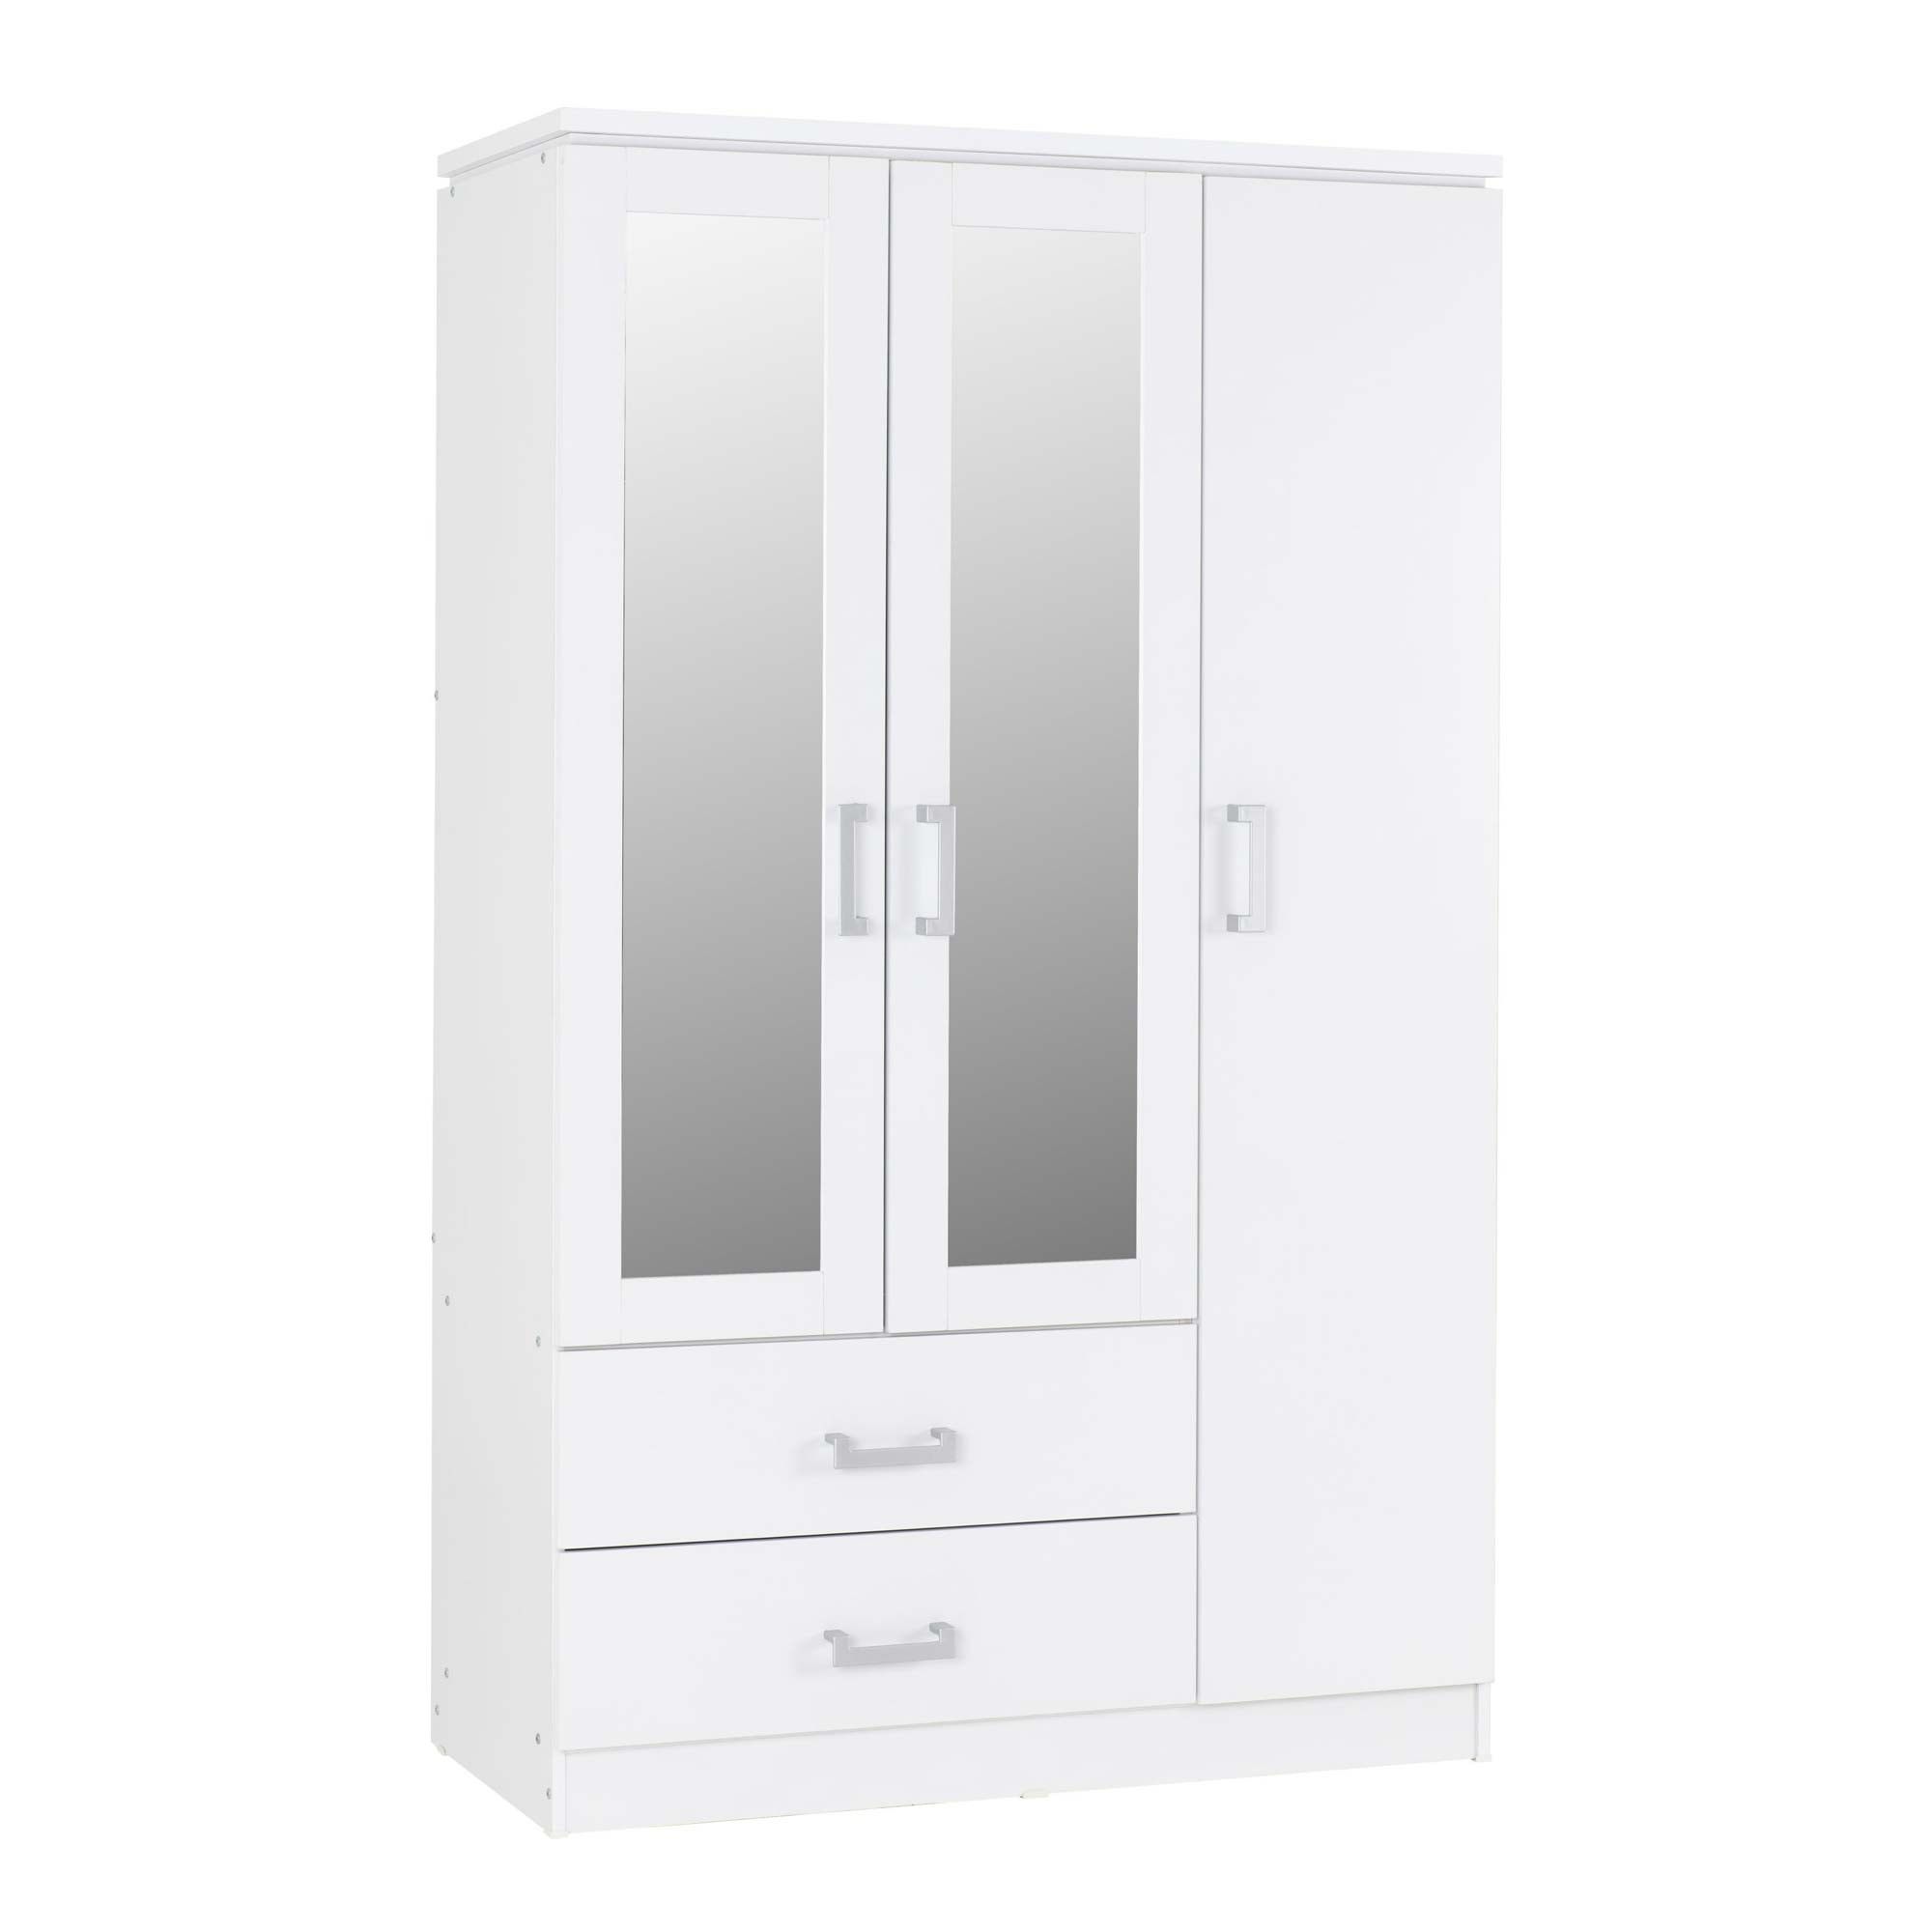 Charles White 3 Door 2 Drawer Wardrobe | Wardrobes | Bedroom Storage Inside 3 Door White Wardrobes With Drawers (Photo 10 of 15)